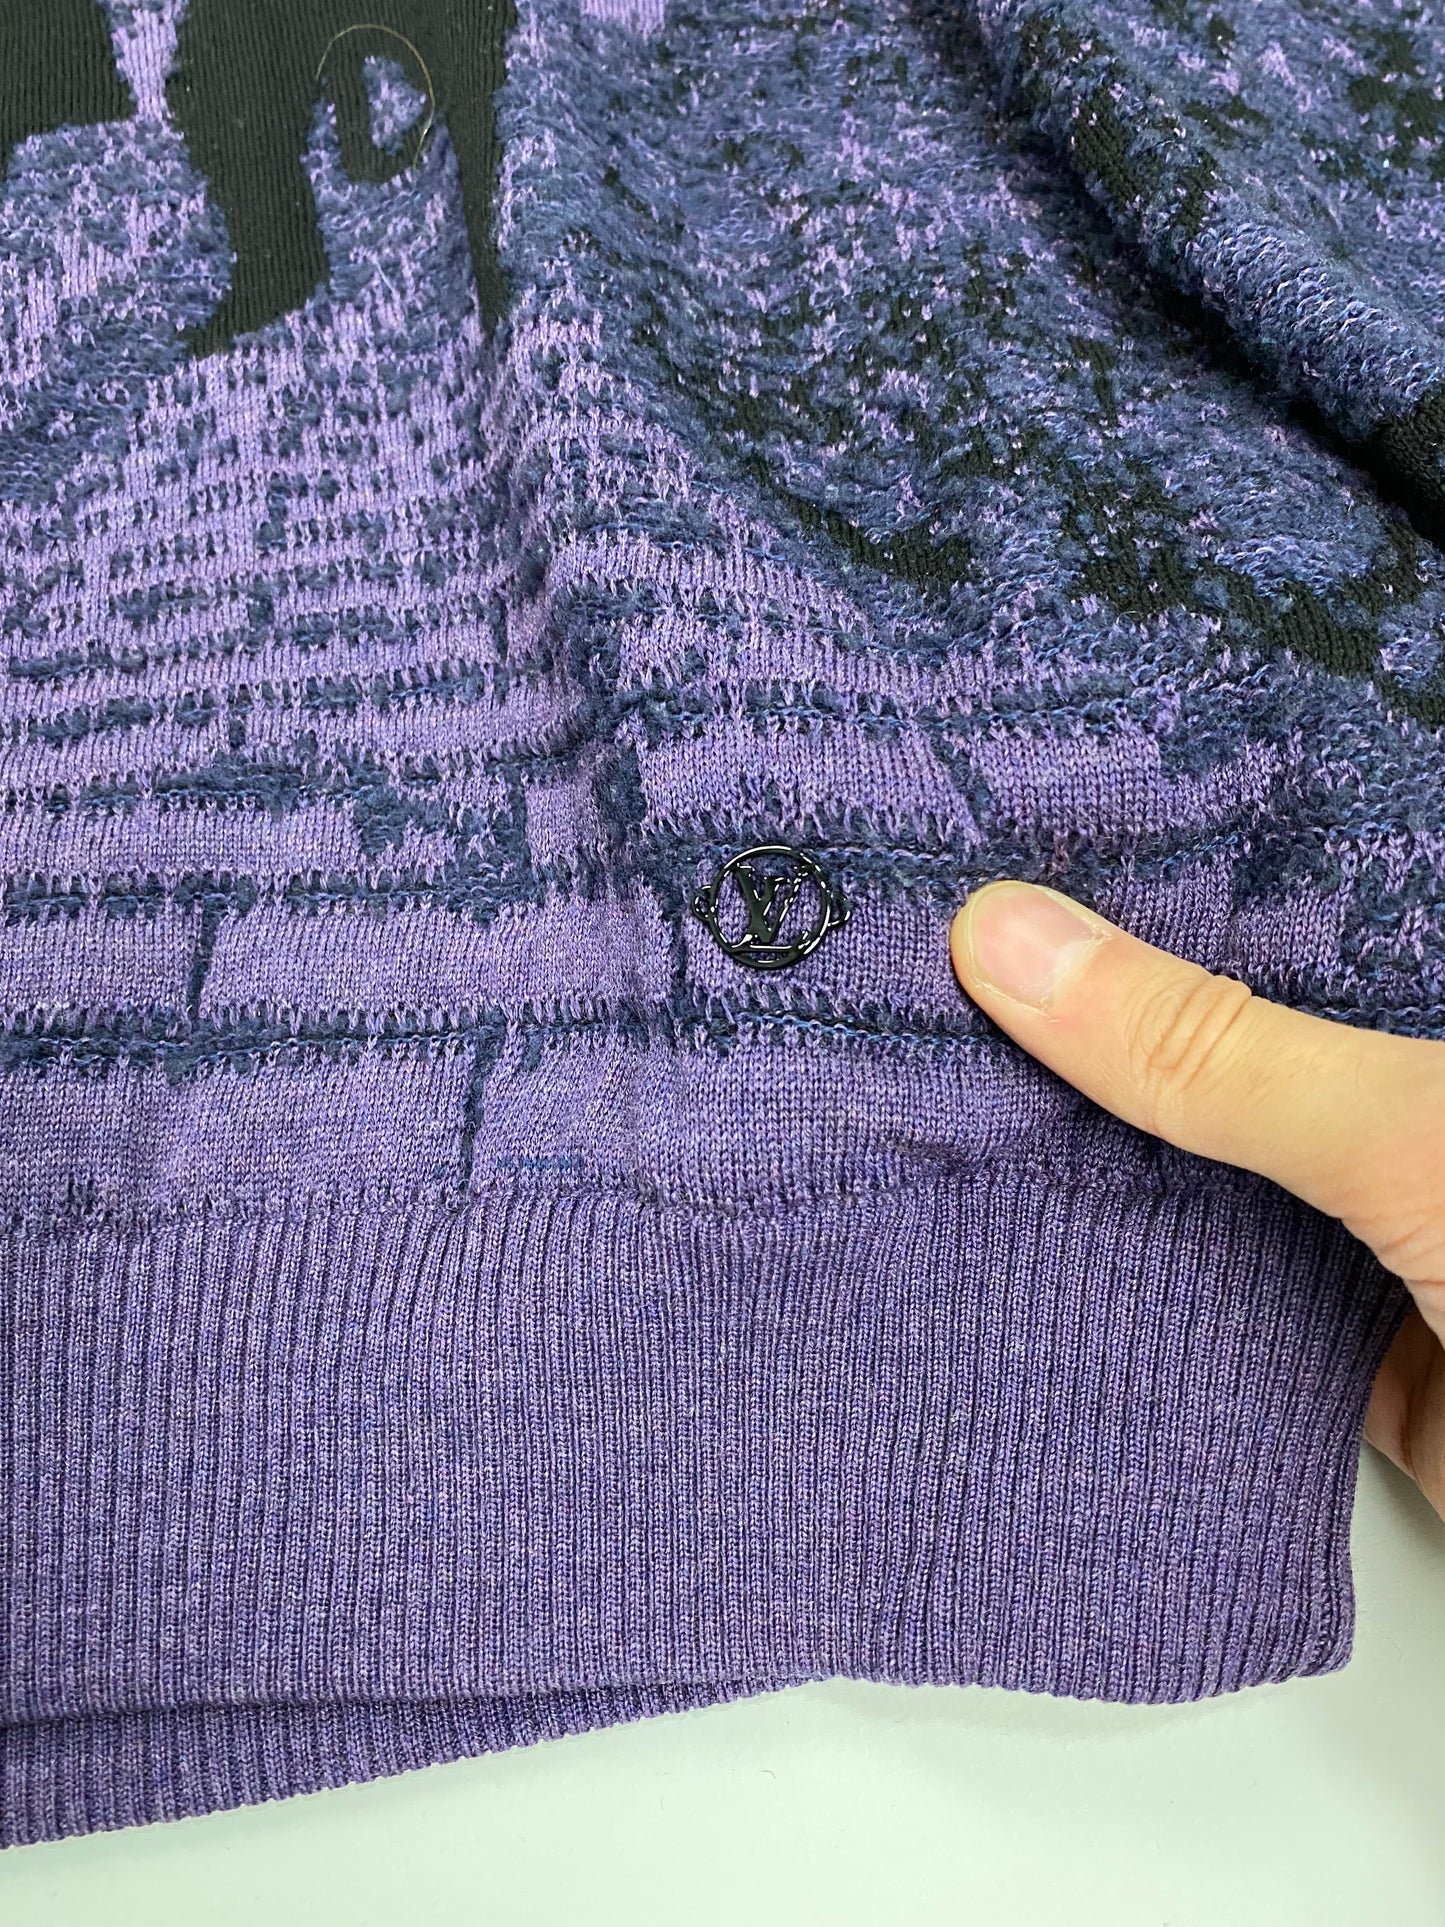 LV SS19 runway brick road sweater in purple SIZE:S|L